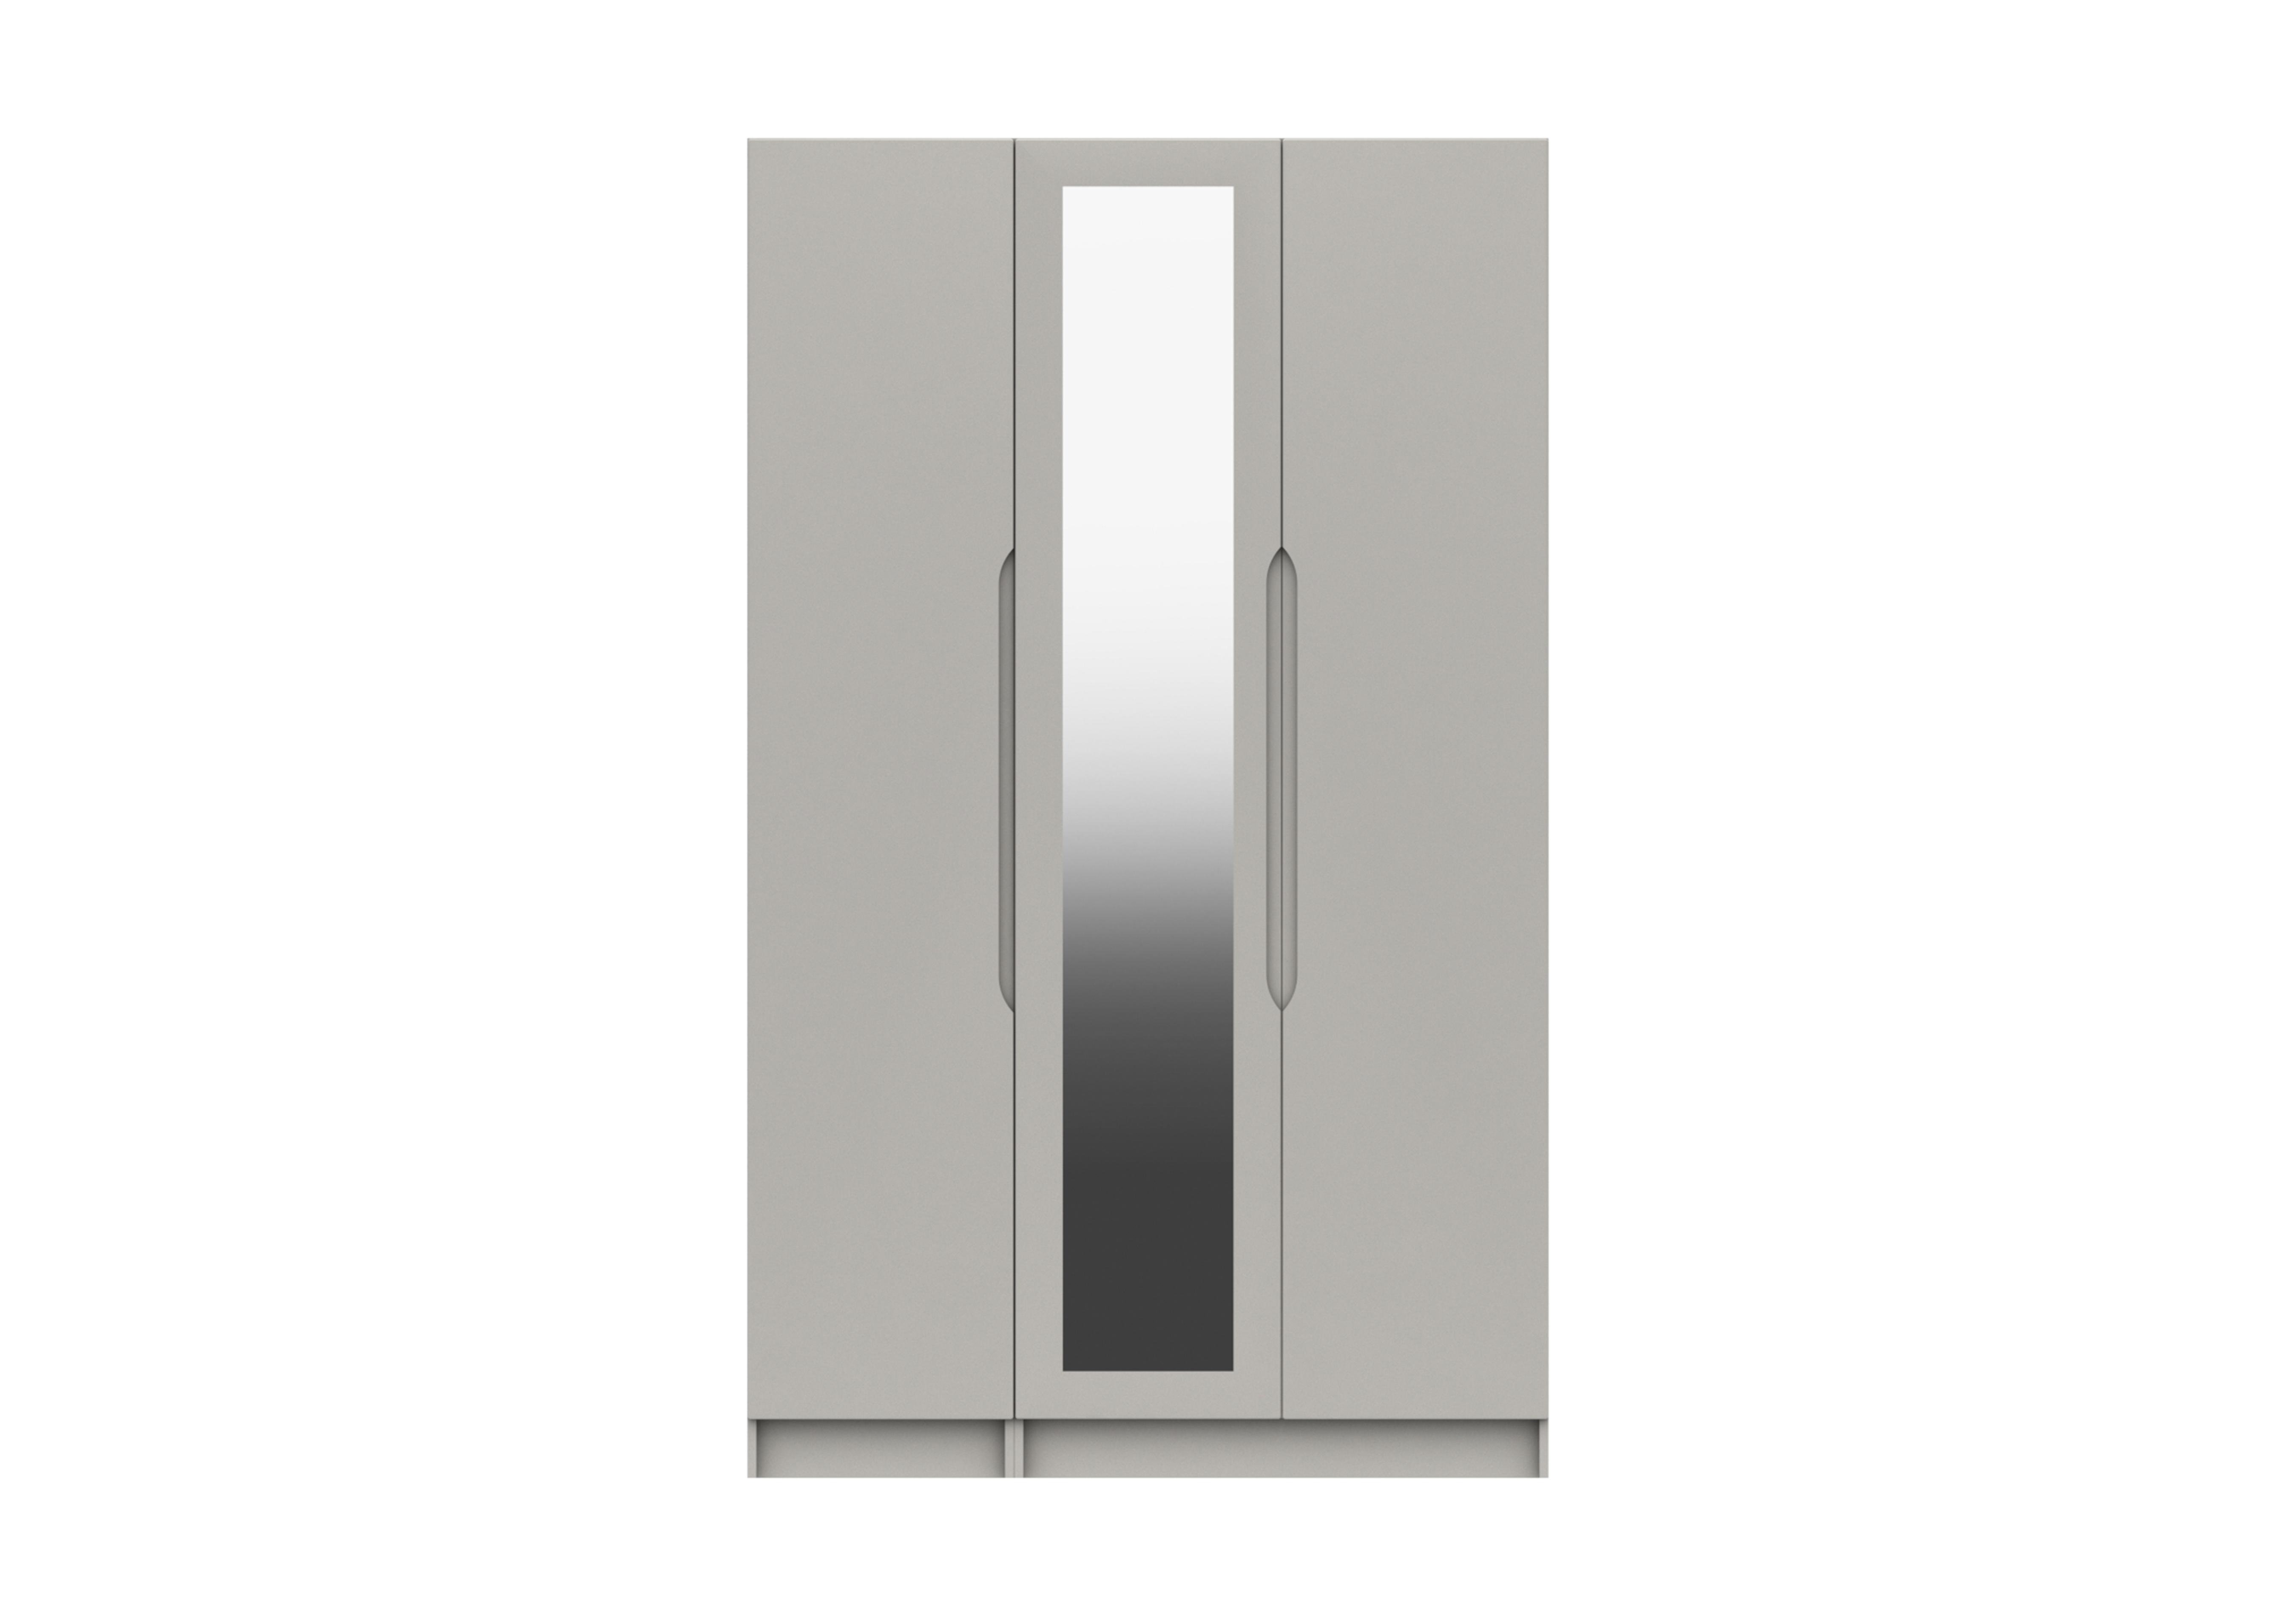 St Pancras 3 Door Tall Wardrobe with Mirror in Light Grey Gloss on Furniture Village